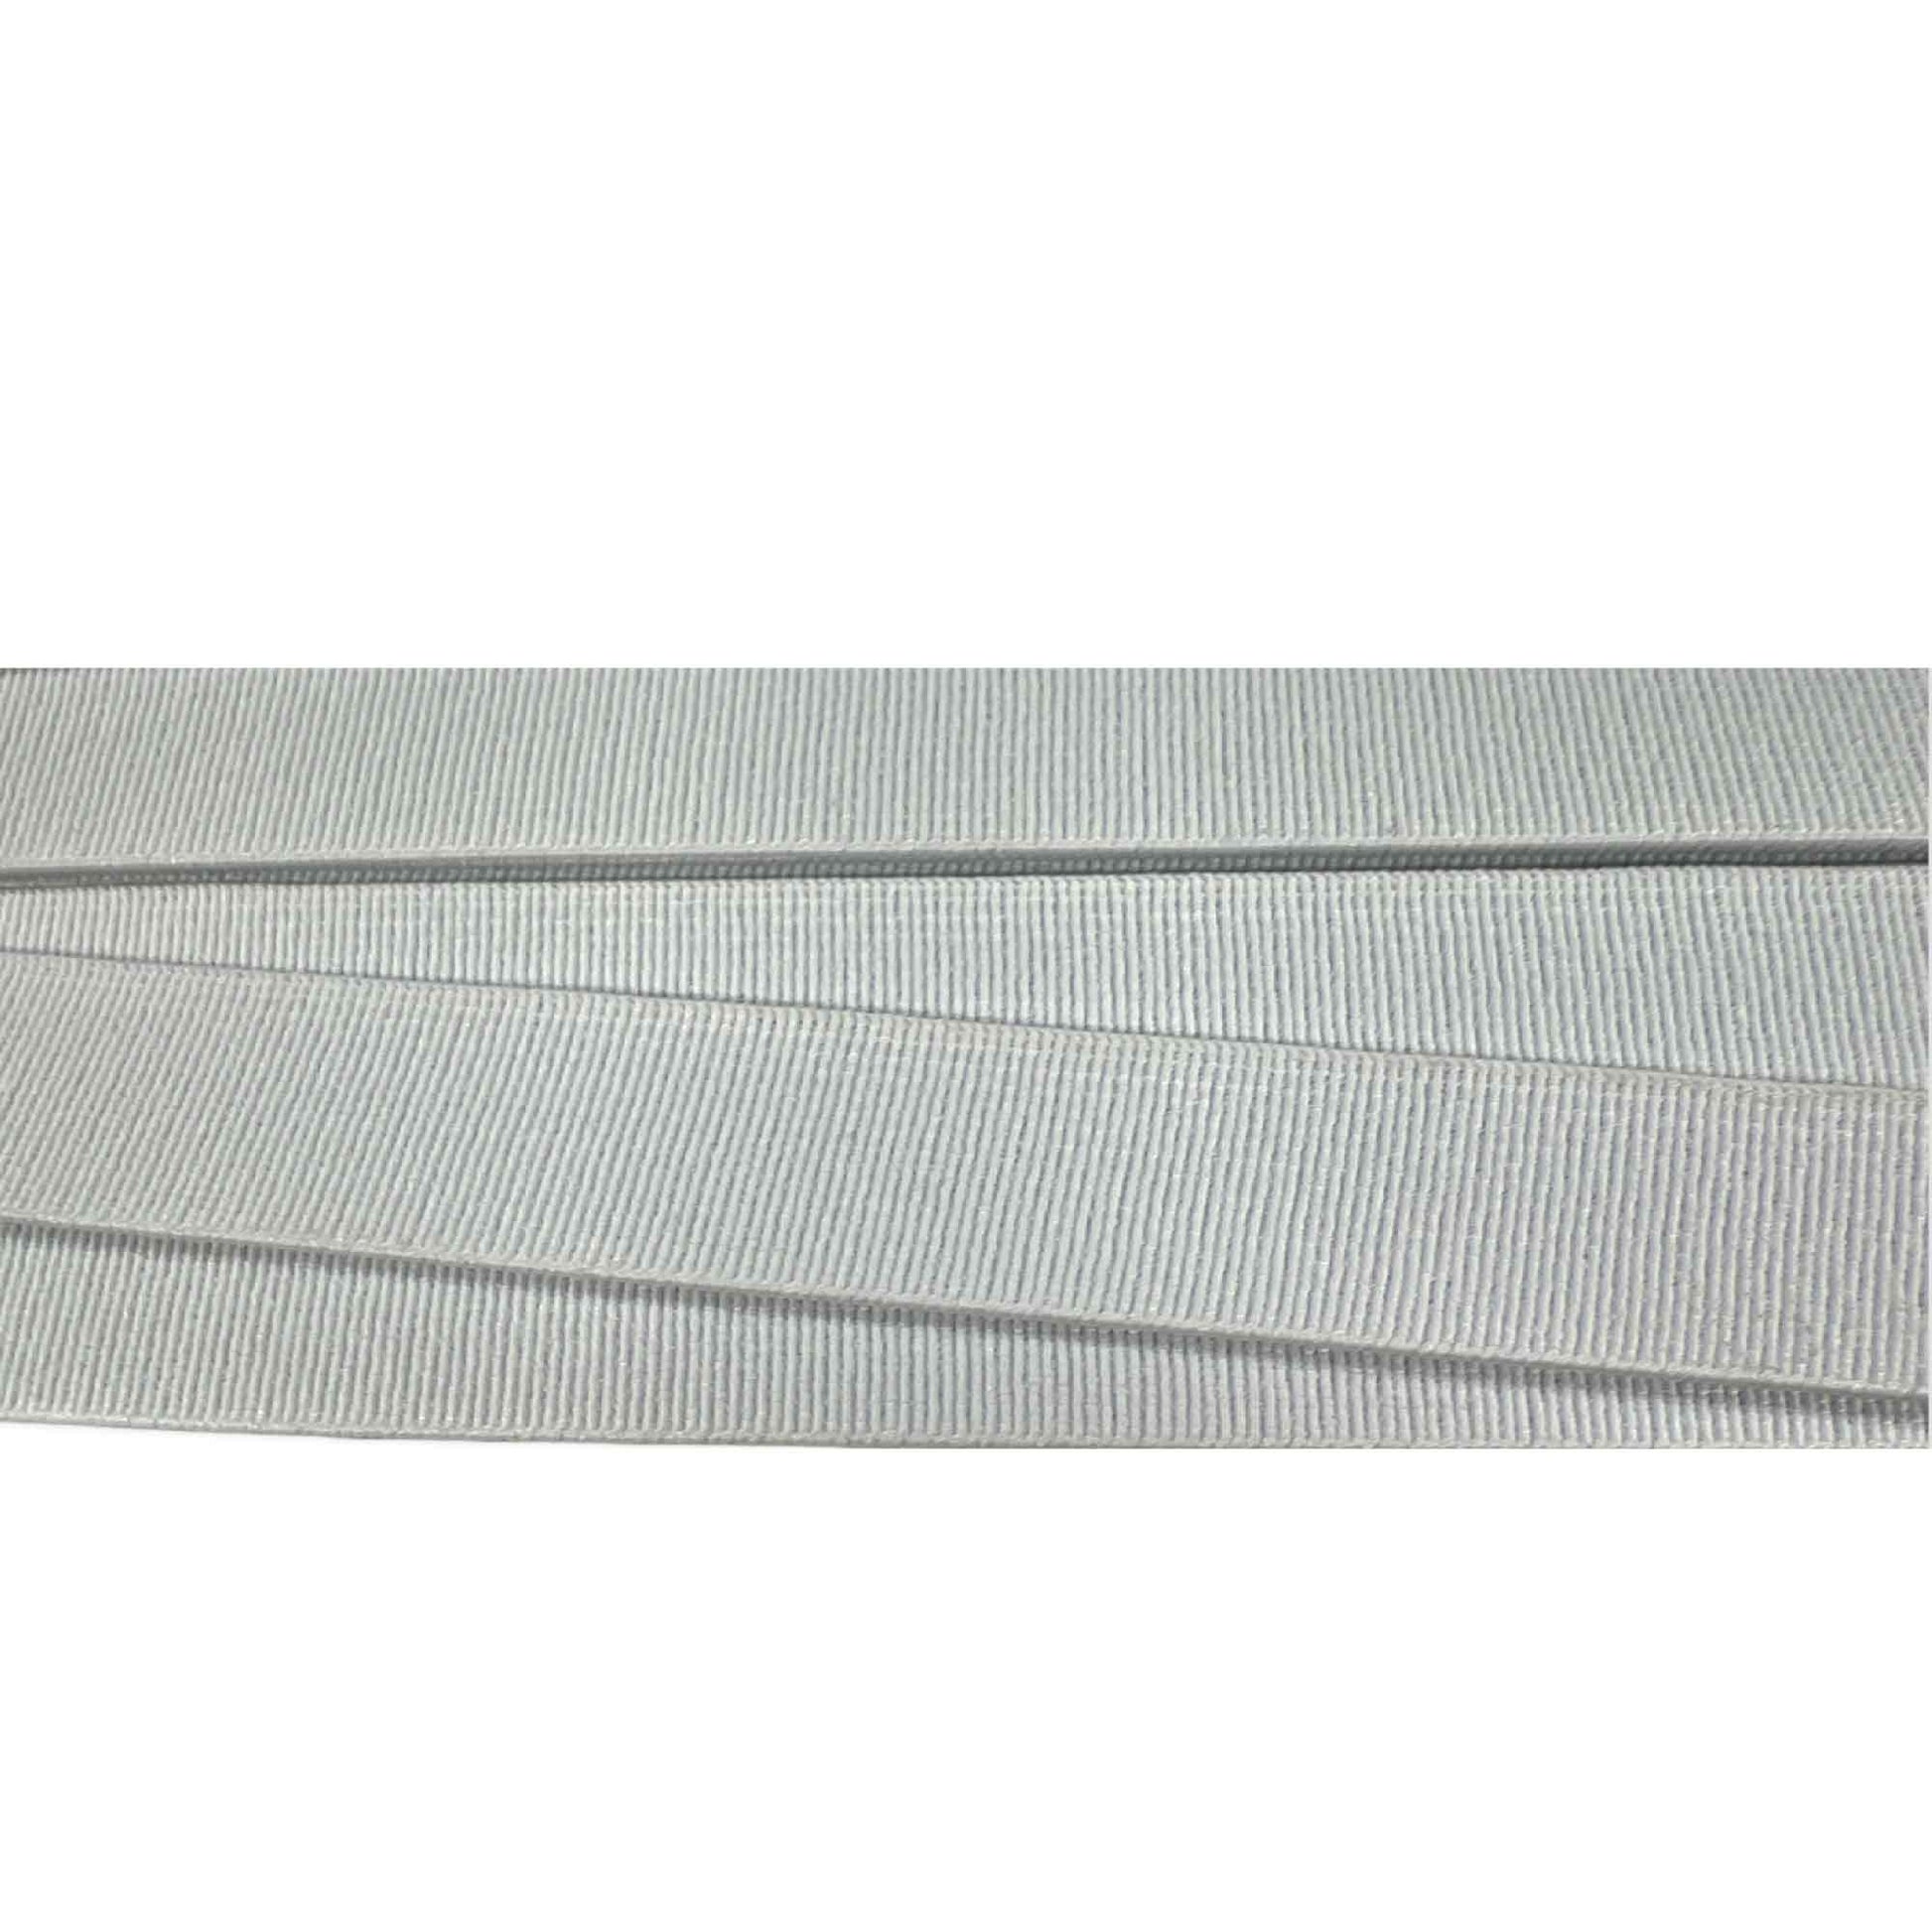 White High Density Elastic Roll 40m - Birch Sewing Fabric Polyester Craft DIY